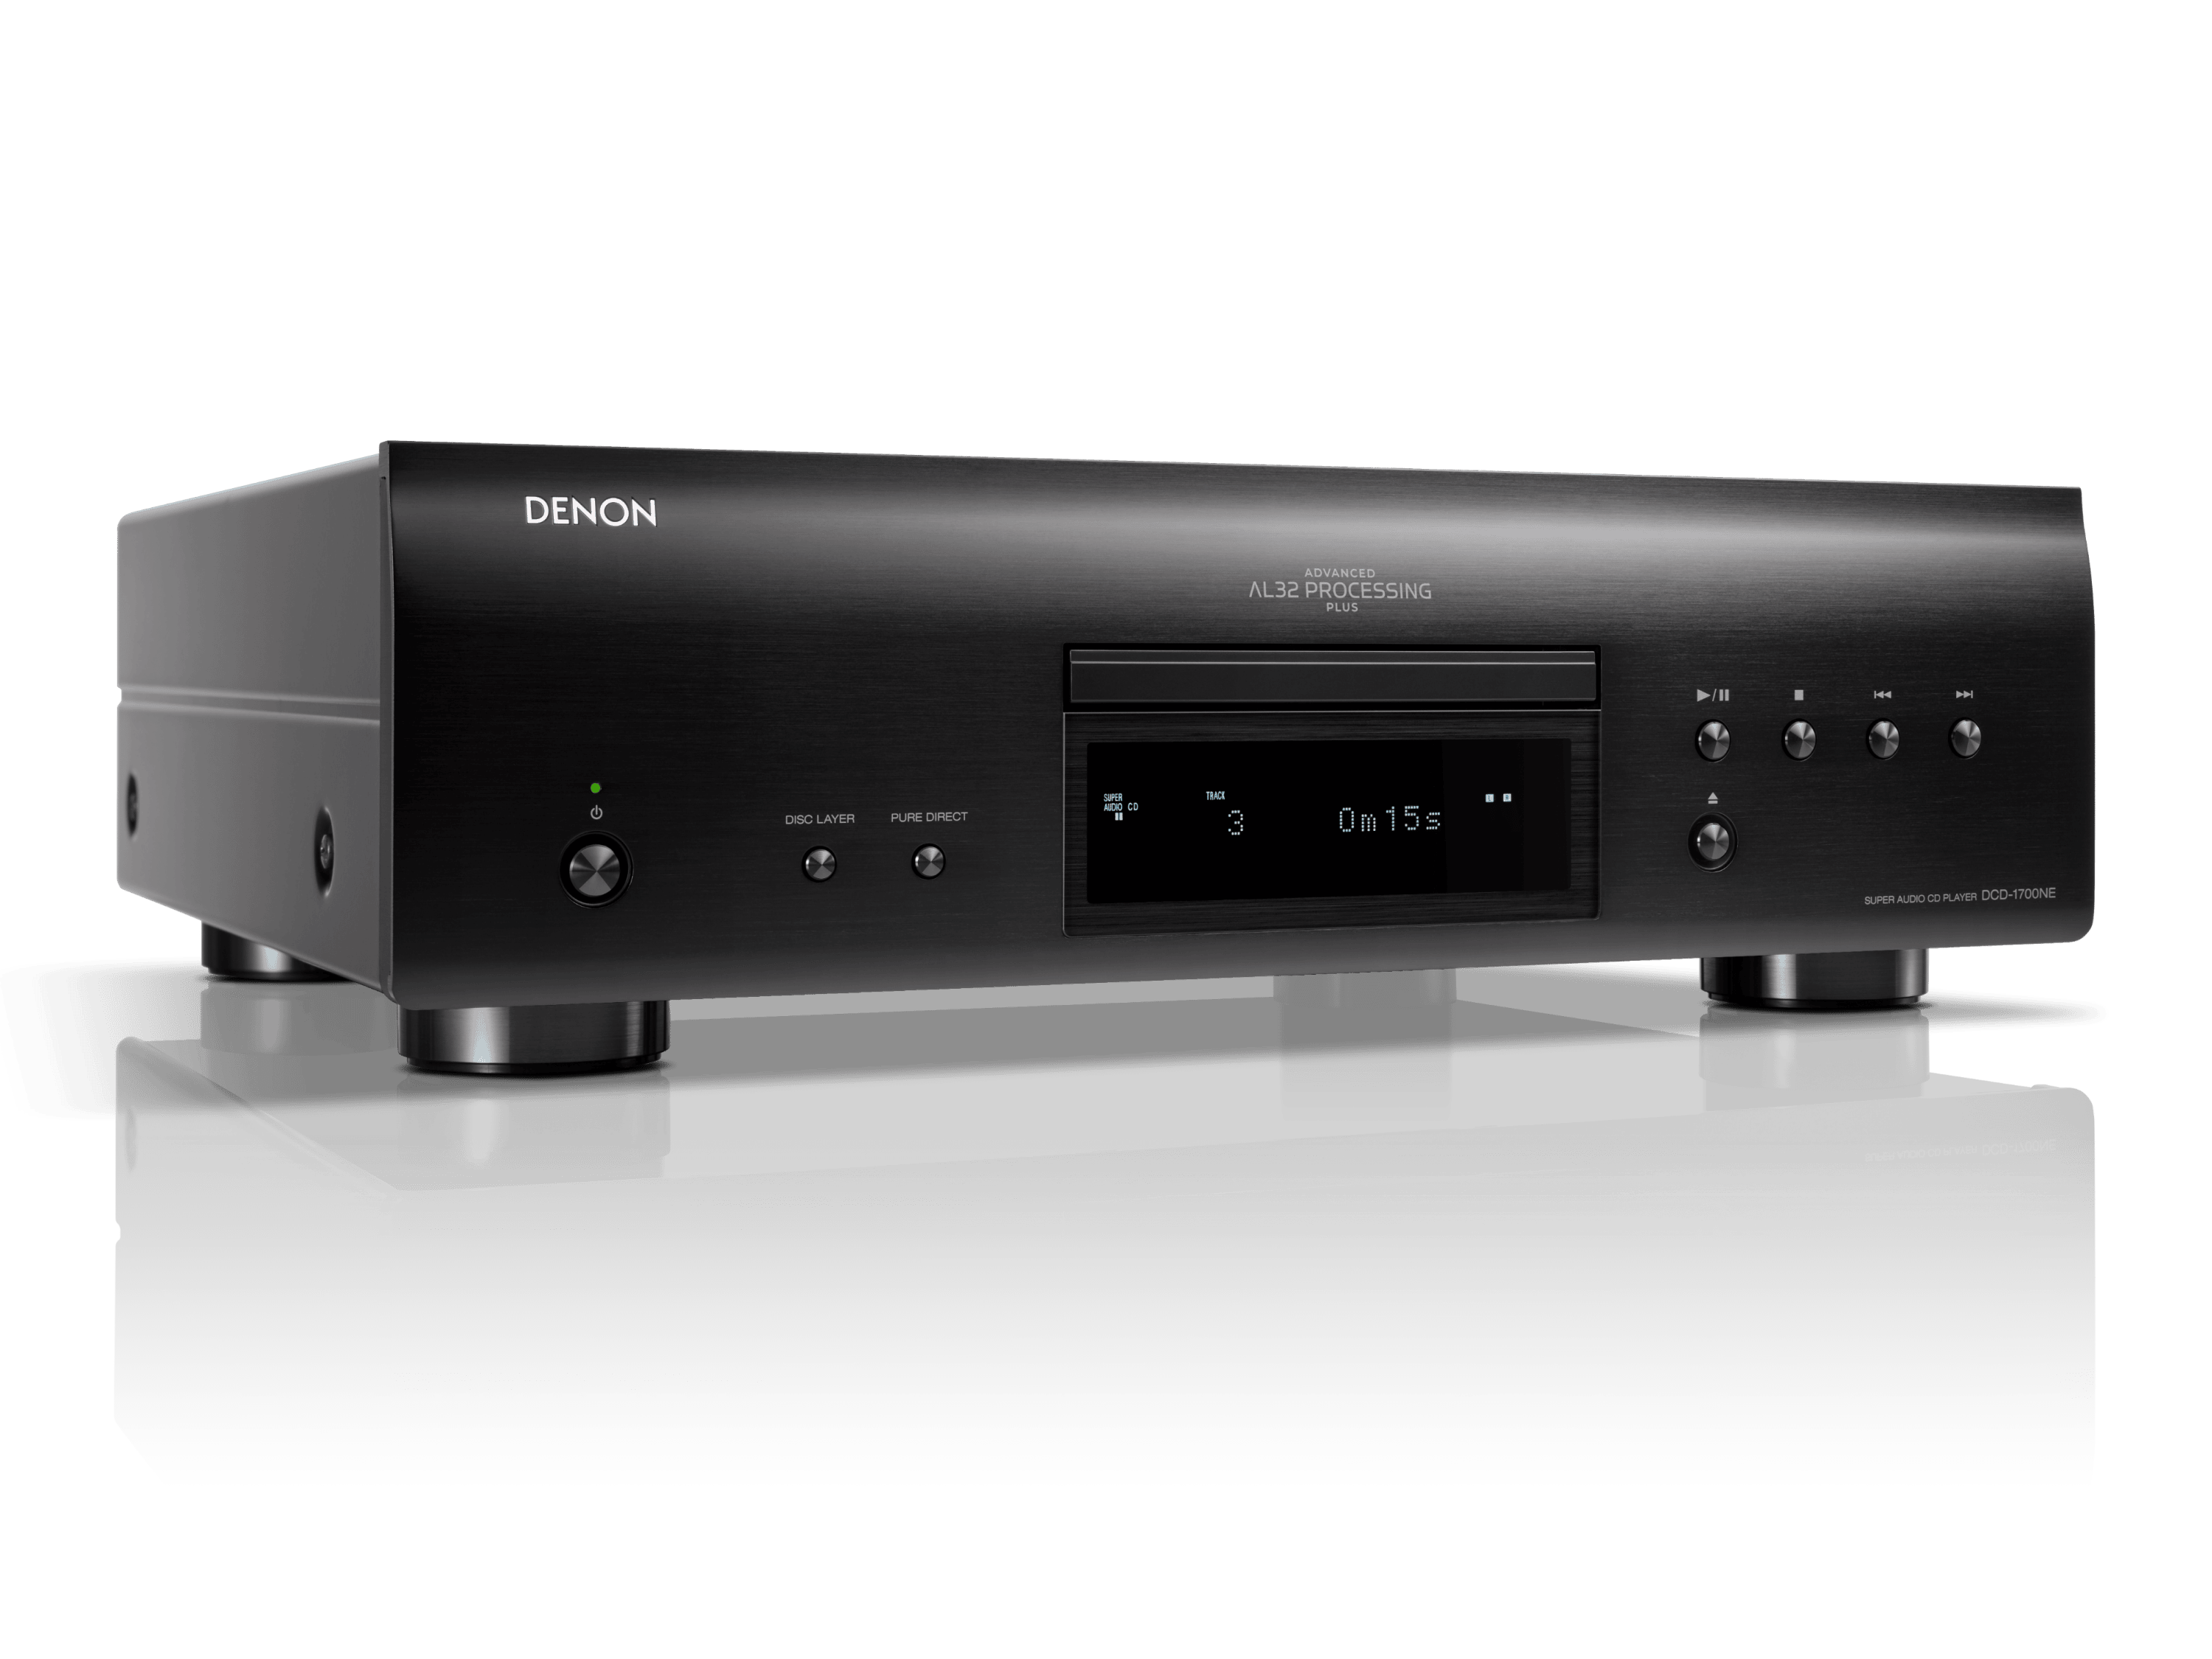 DCD-1700NE - CD/SACD-Player DCD-1700NE mit | Plus AL32 Processing Europe - Advanced Denon